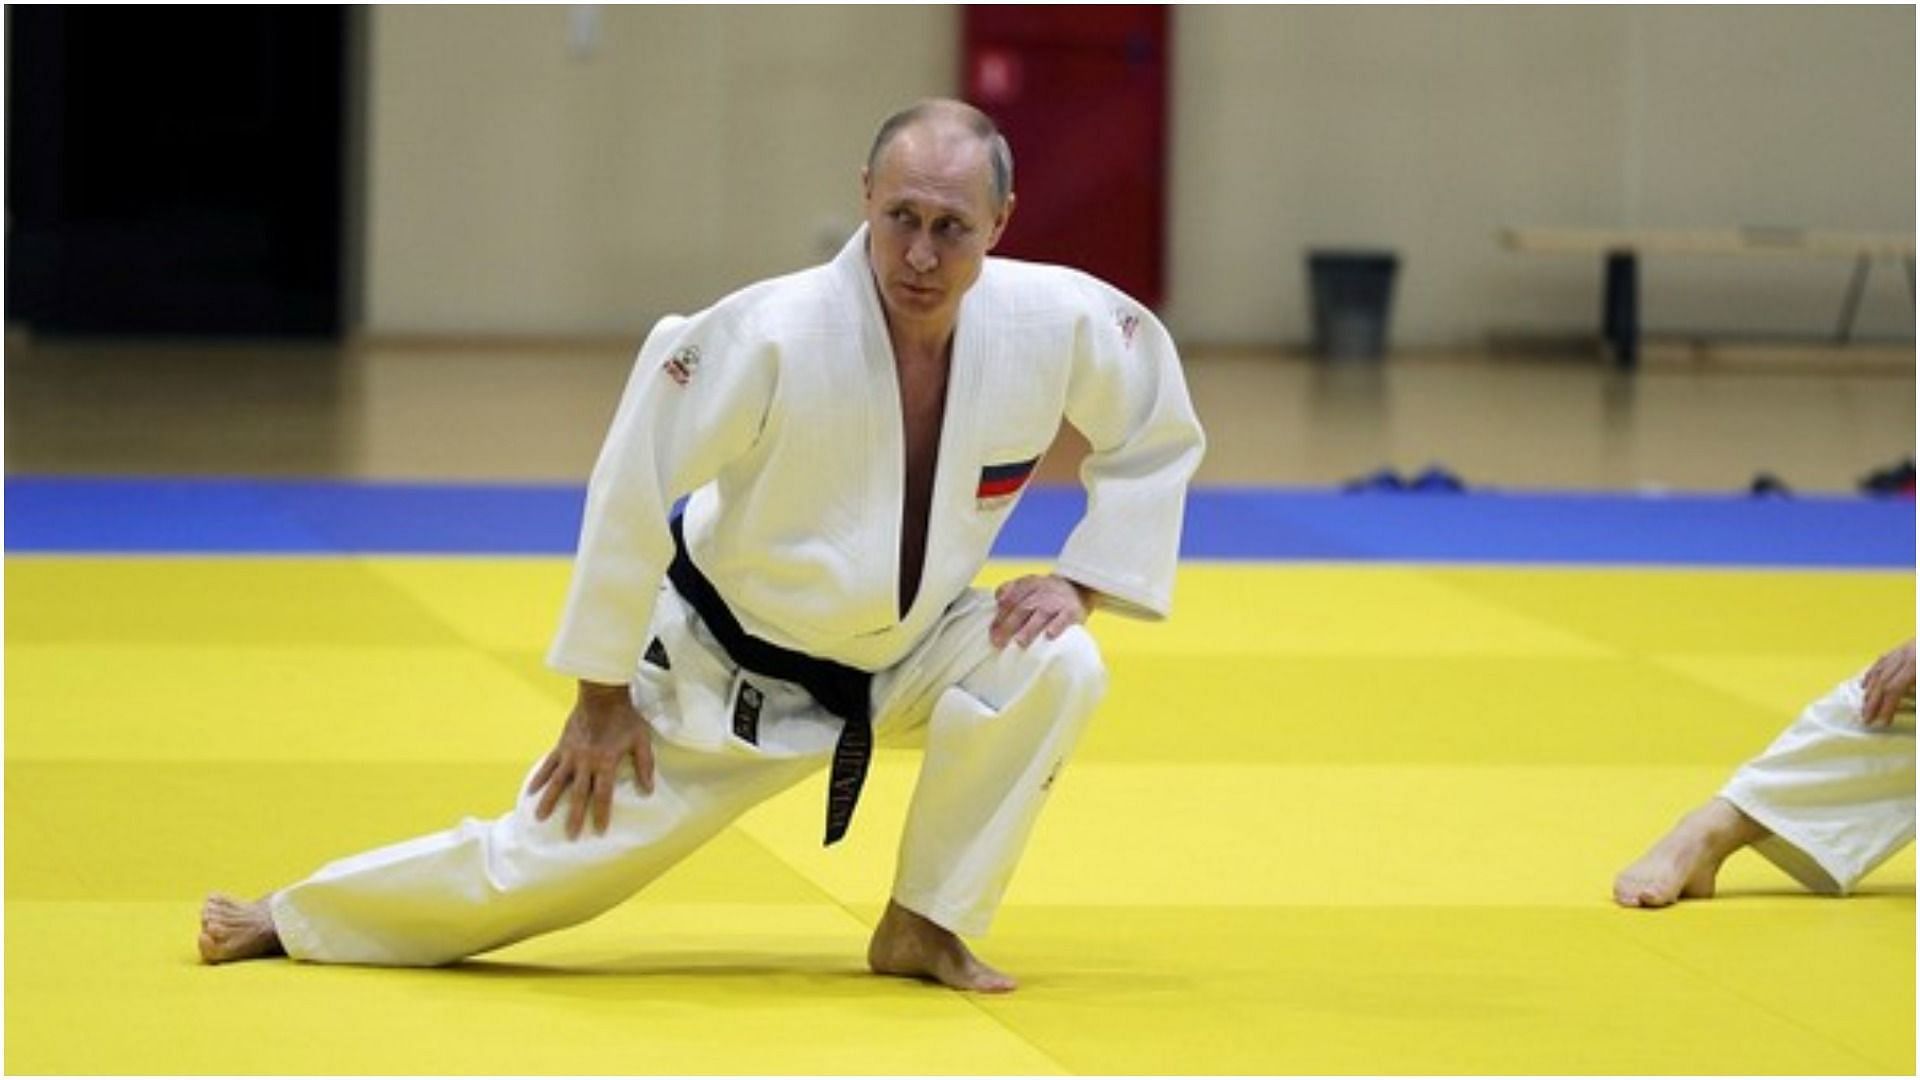 Vladimir Putin during a friendly judo match (Pic Credit: ANI)